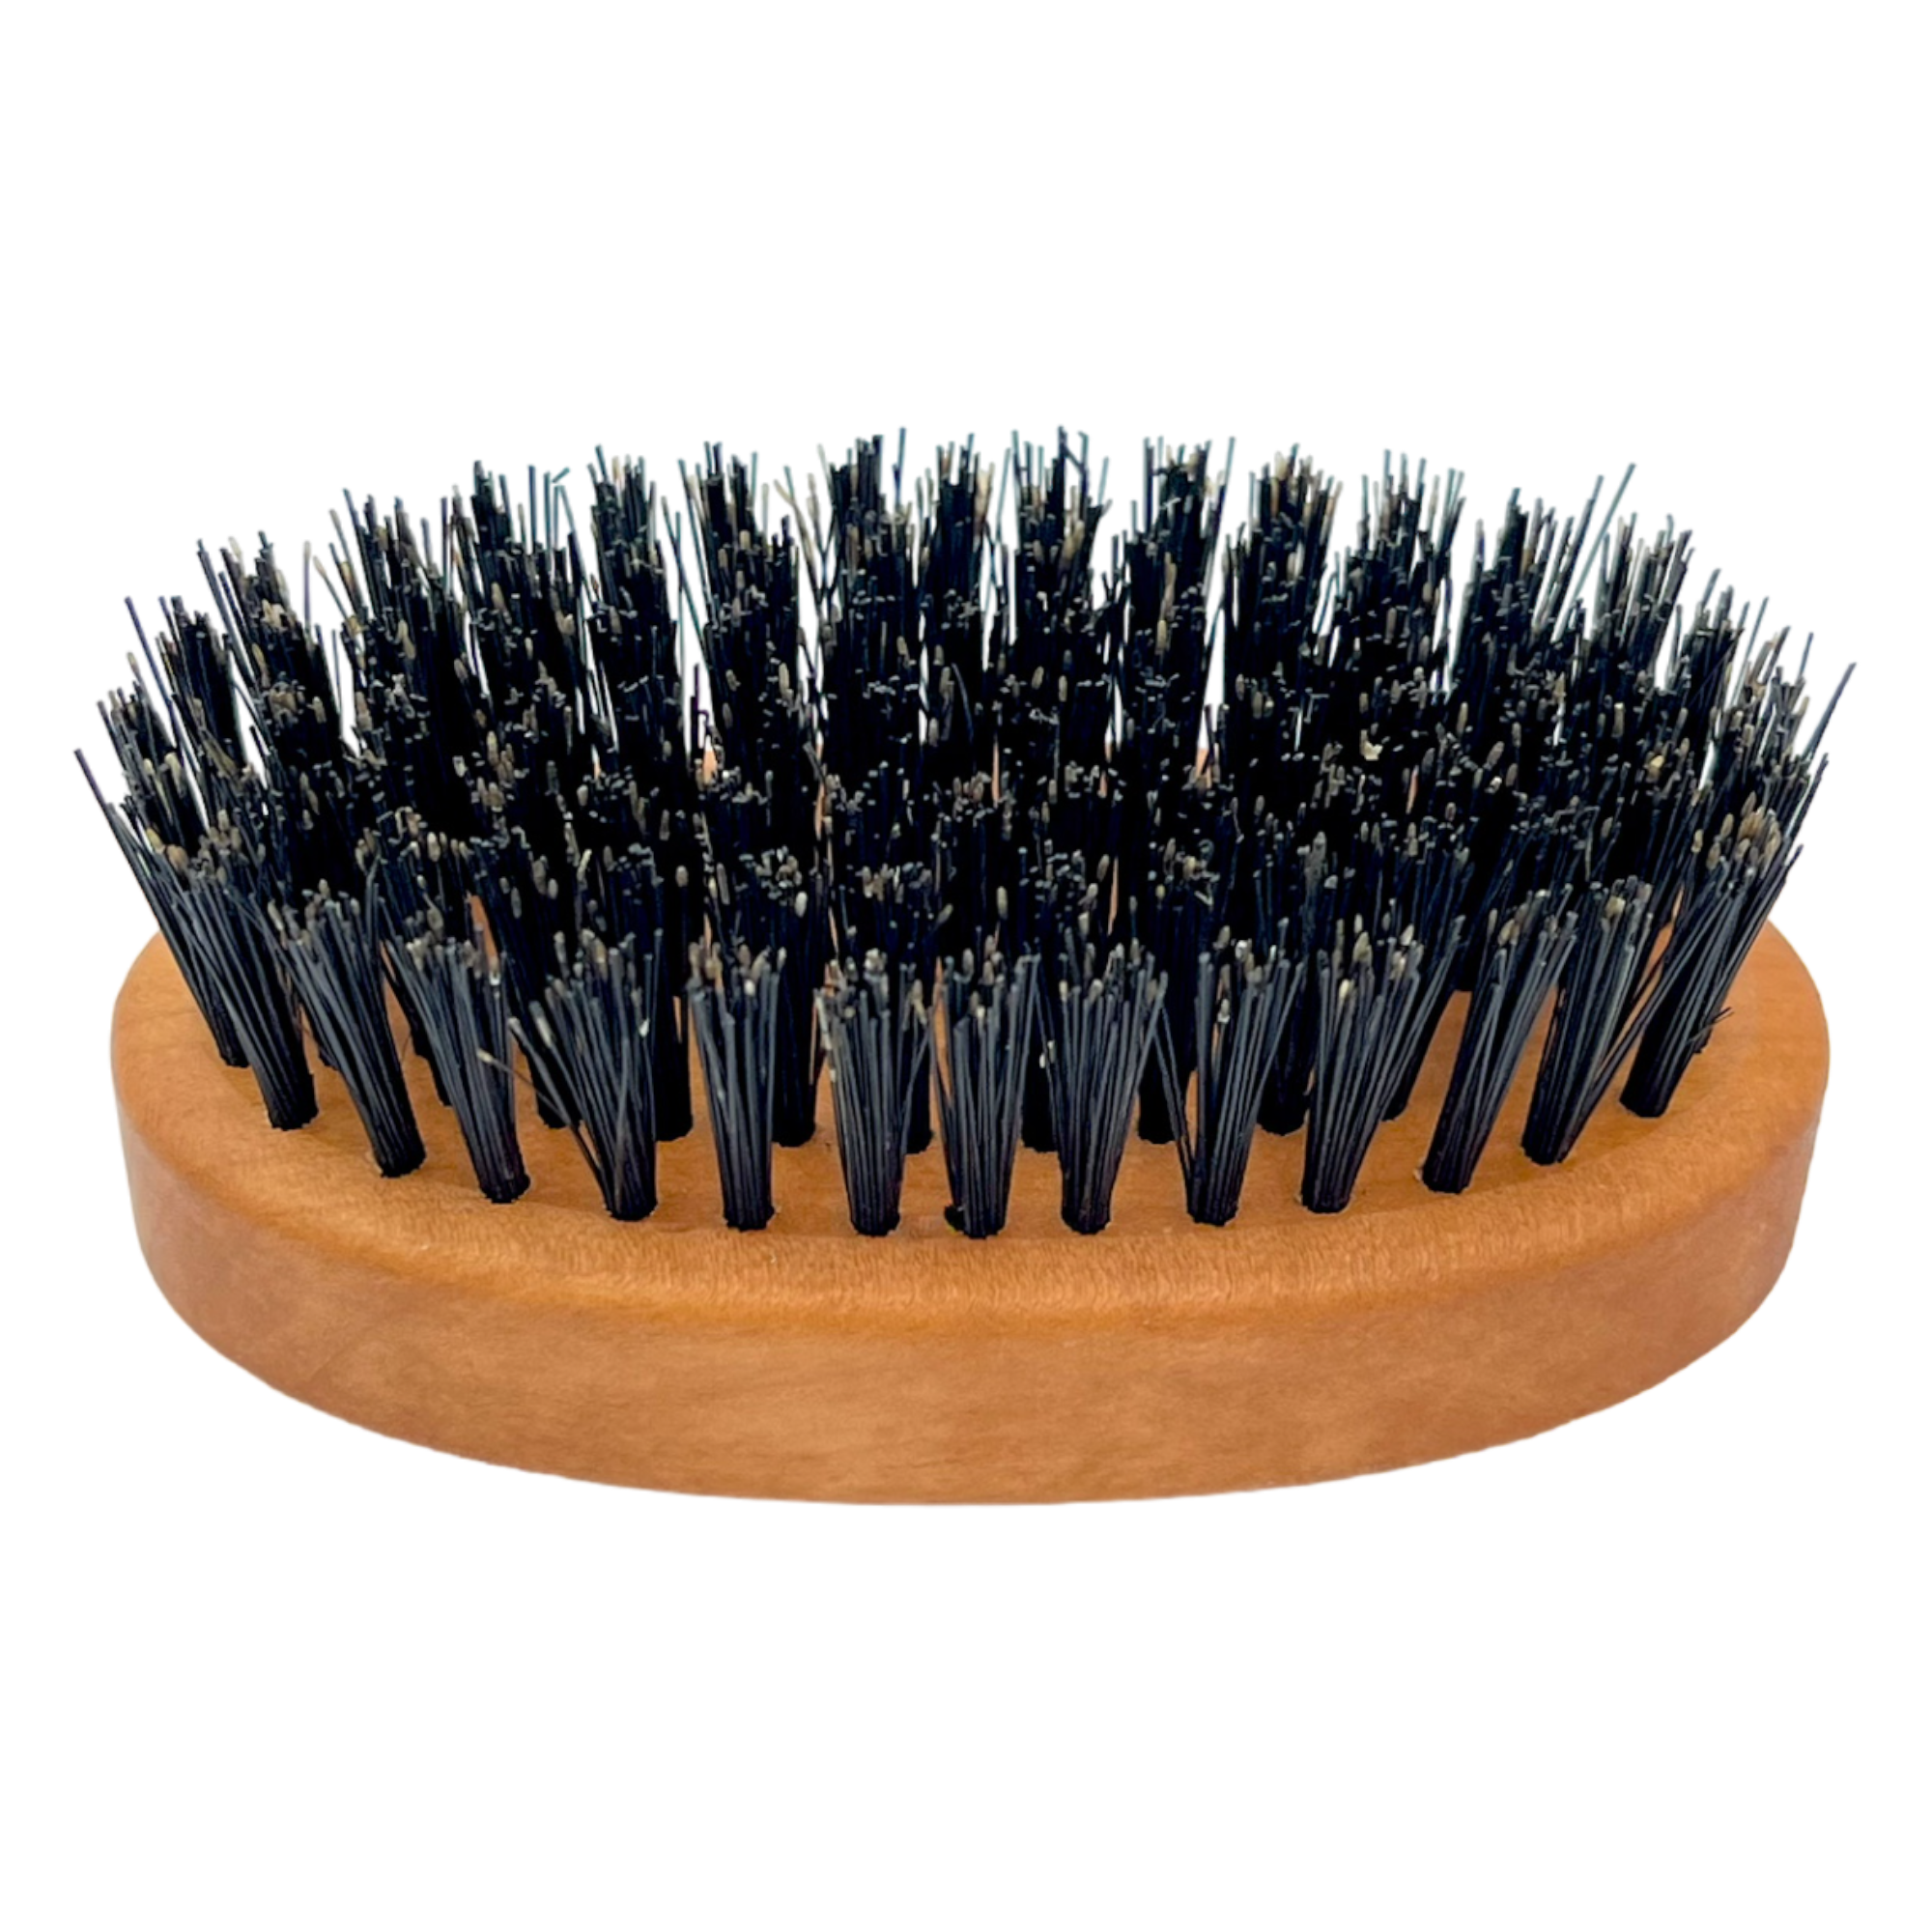 Dural Pear wood beard brush with wild boar bristles